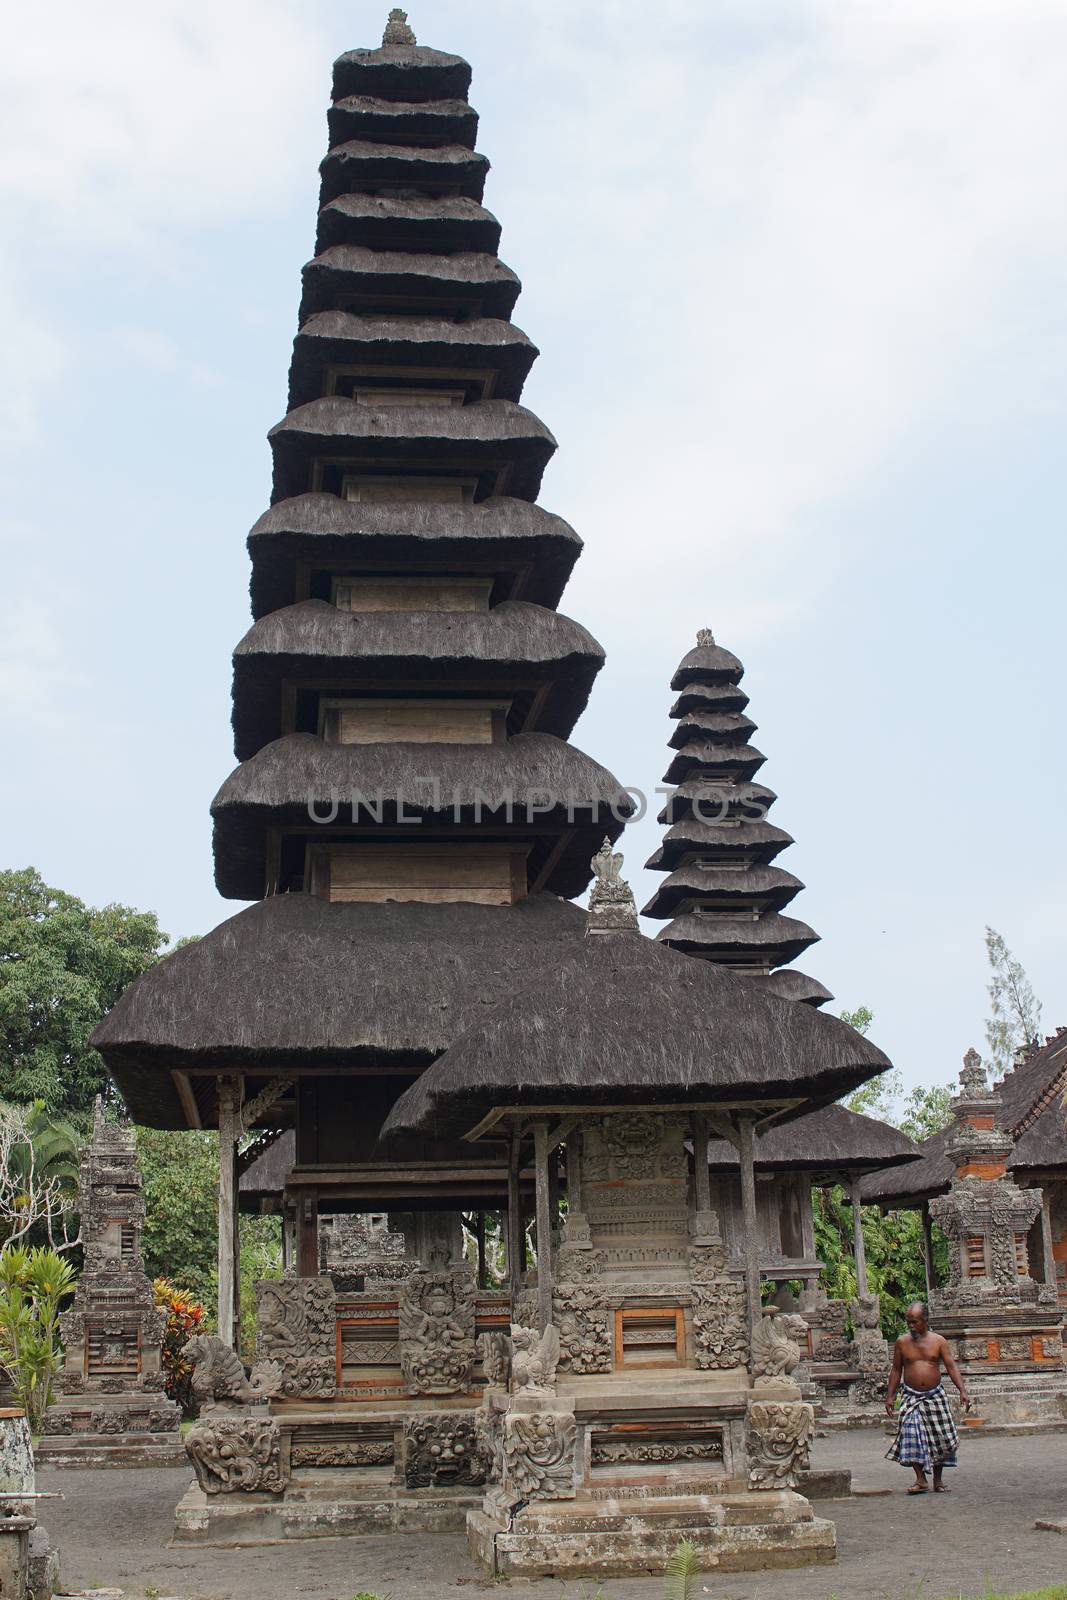 Pura Taman Ayun, Mengwi, Bali, Indonesia by alfotokunst